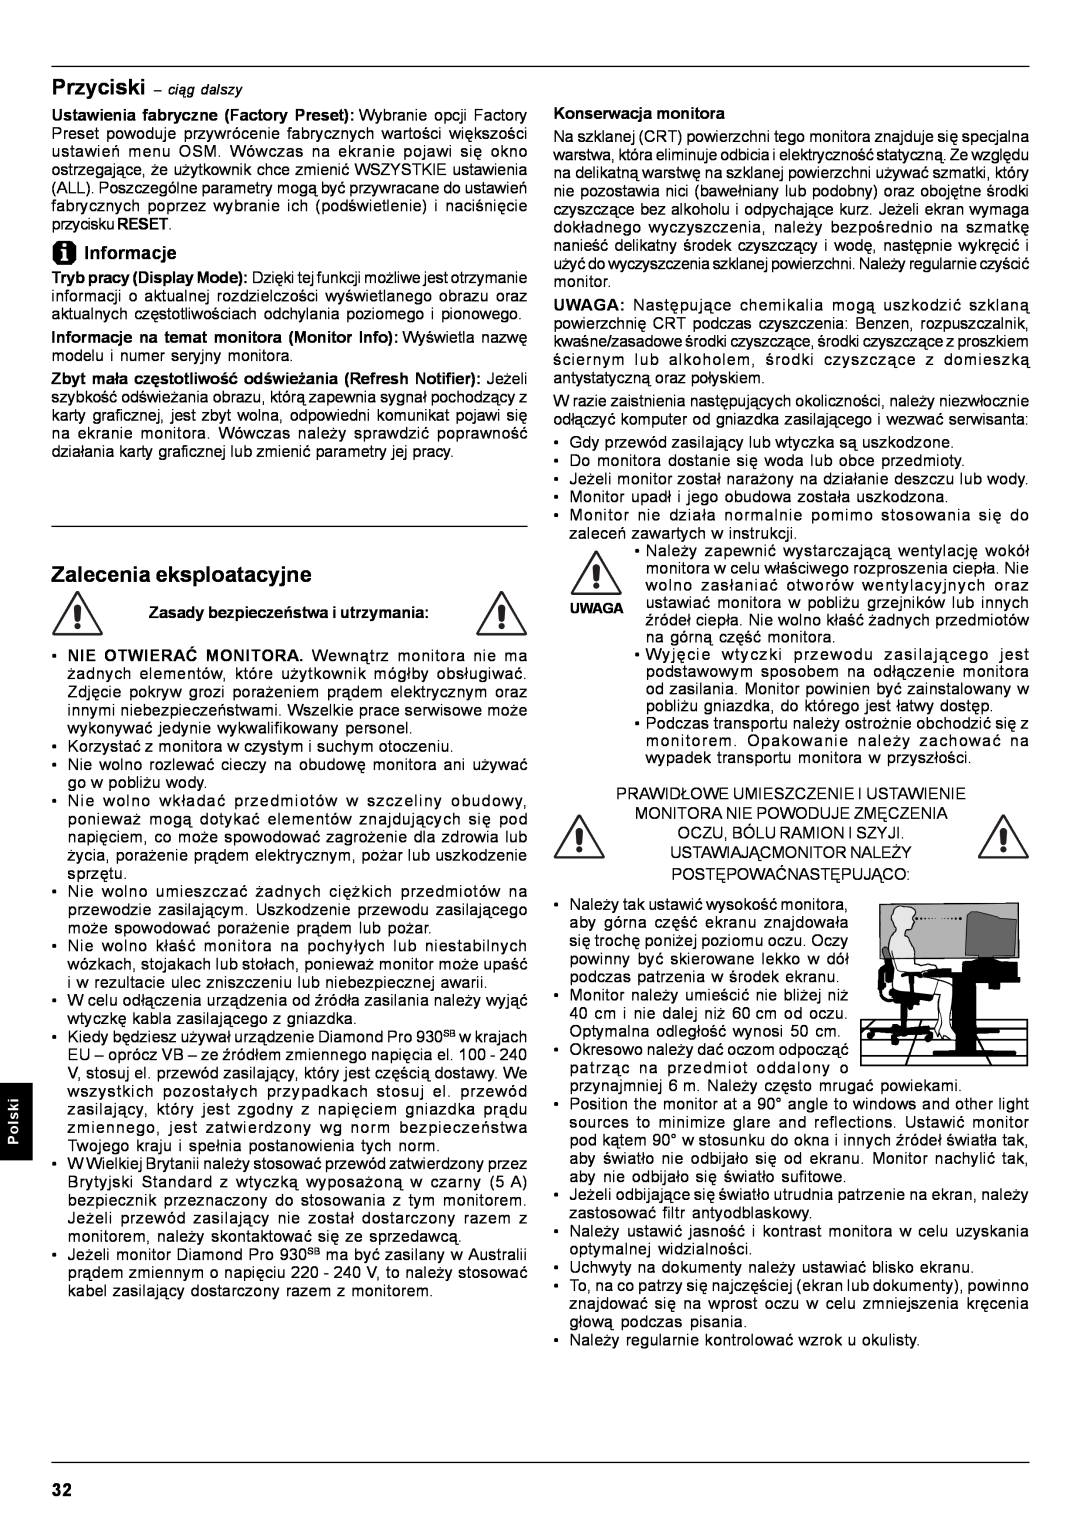 Mitsubishi Electronics Pro 930SB user manual Zalecenia eksploatacyjne, Informacje 